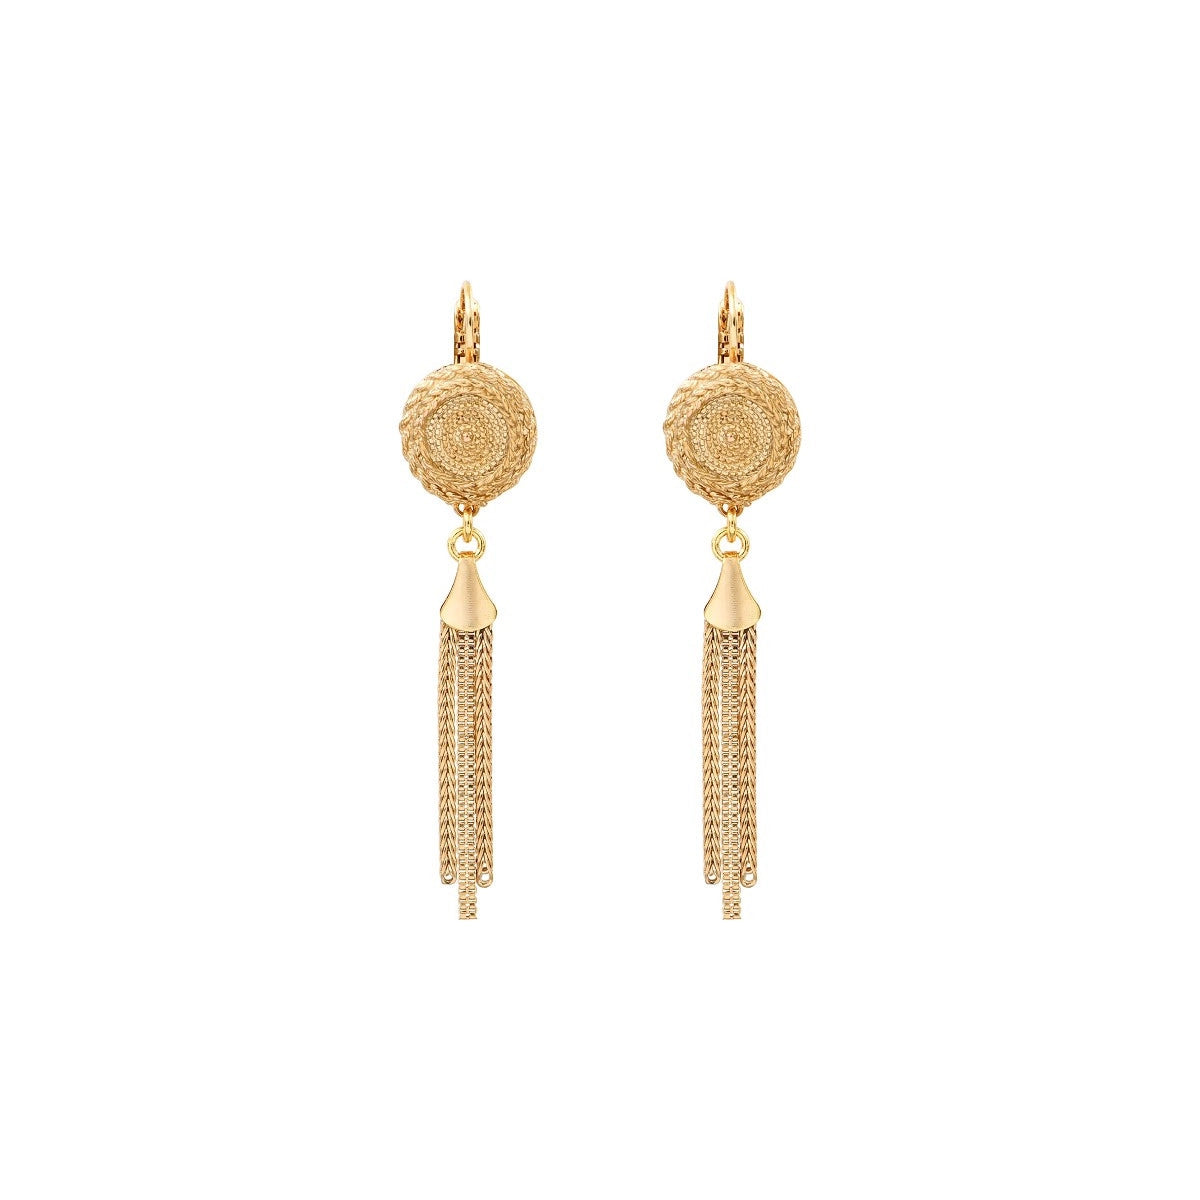 Feminine fine gold-plated metal sleeper earrings